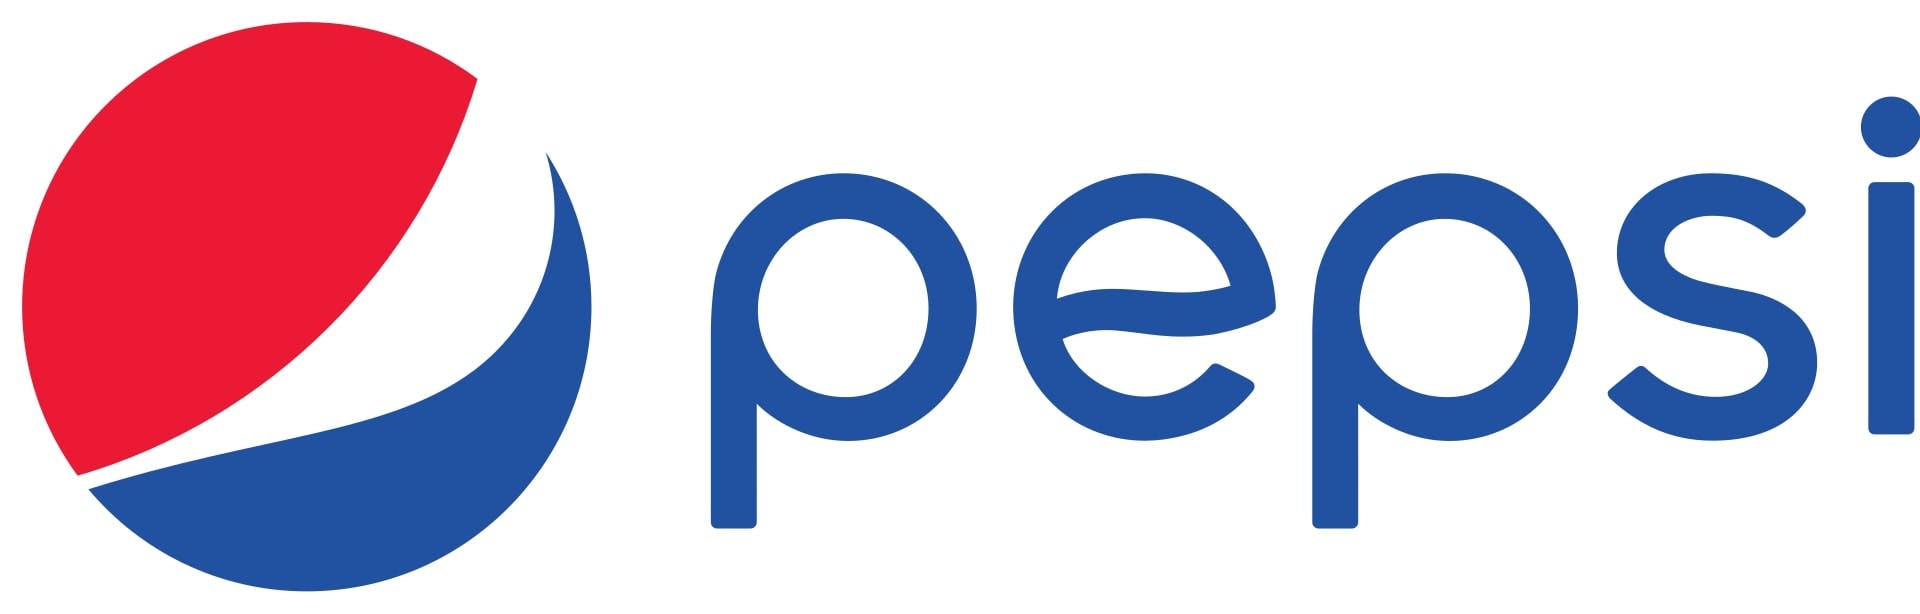  pepsi brand logo design